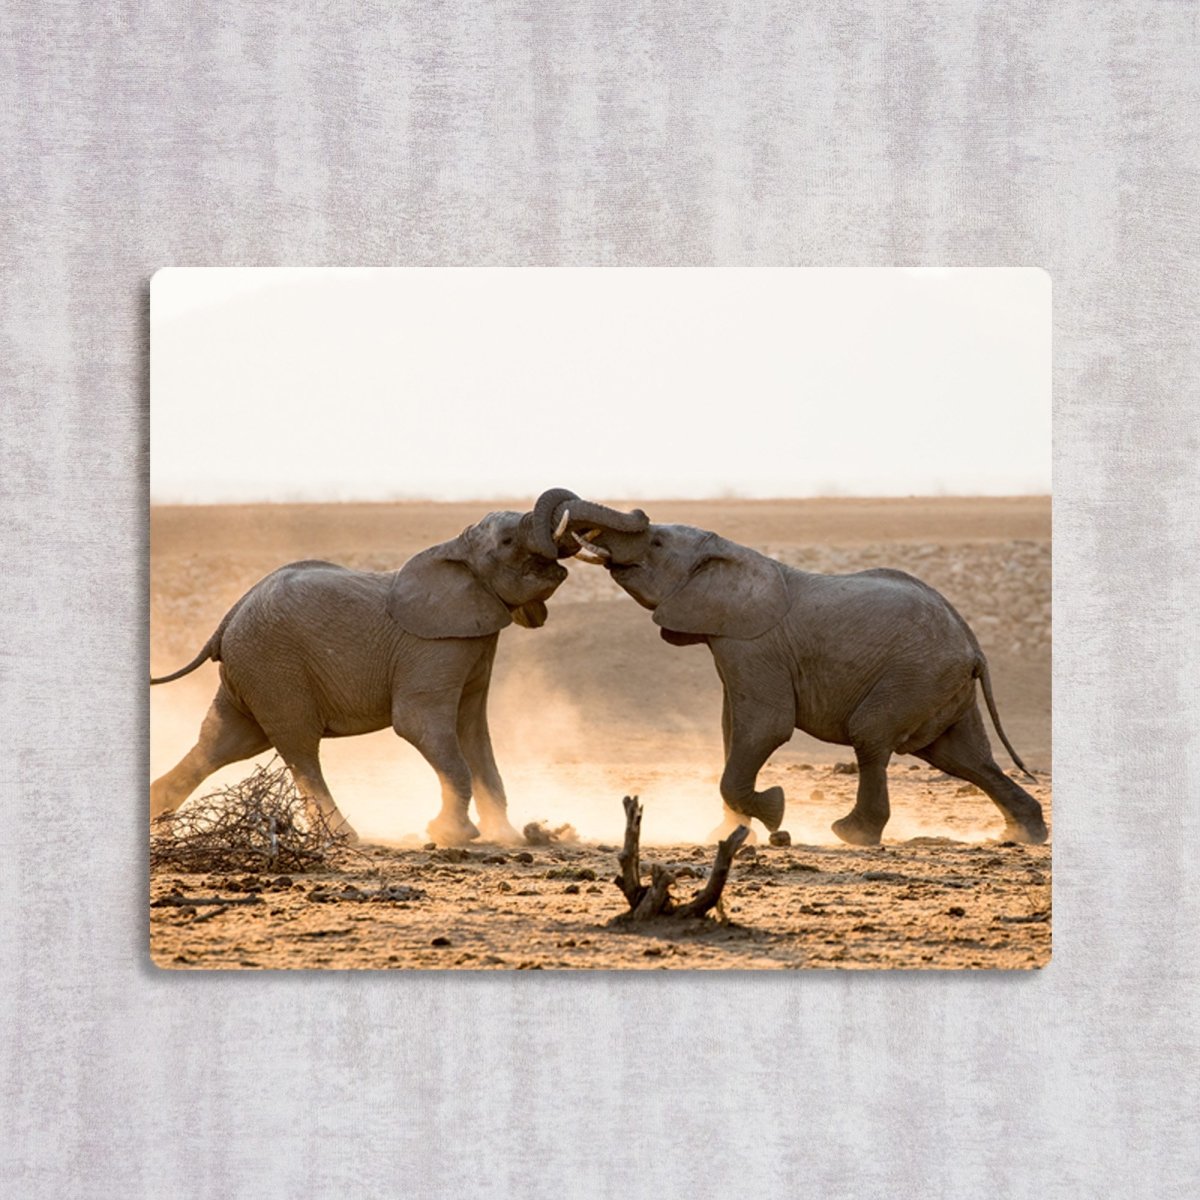 WILD AFRICA: TWO ELEPHANTS COLLIDE - cmzart